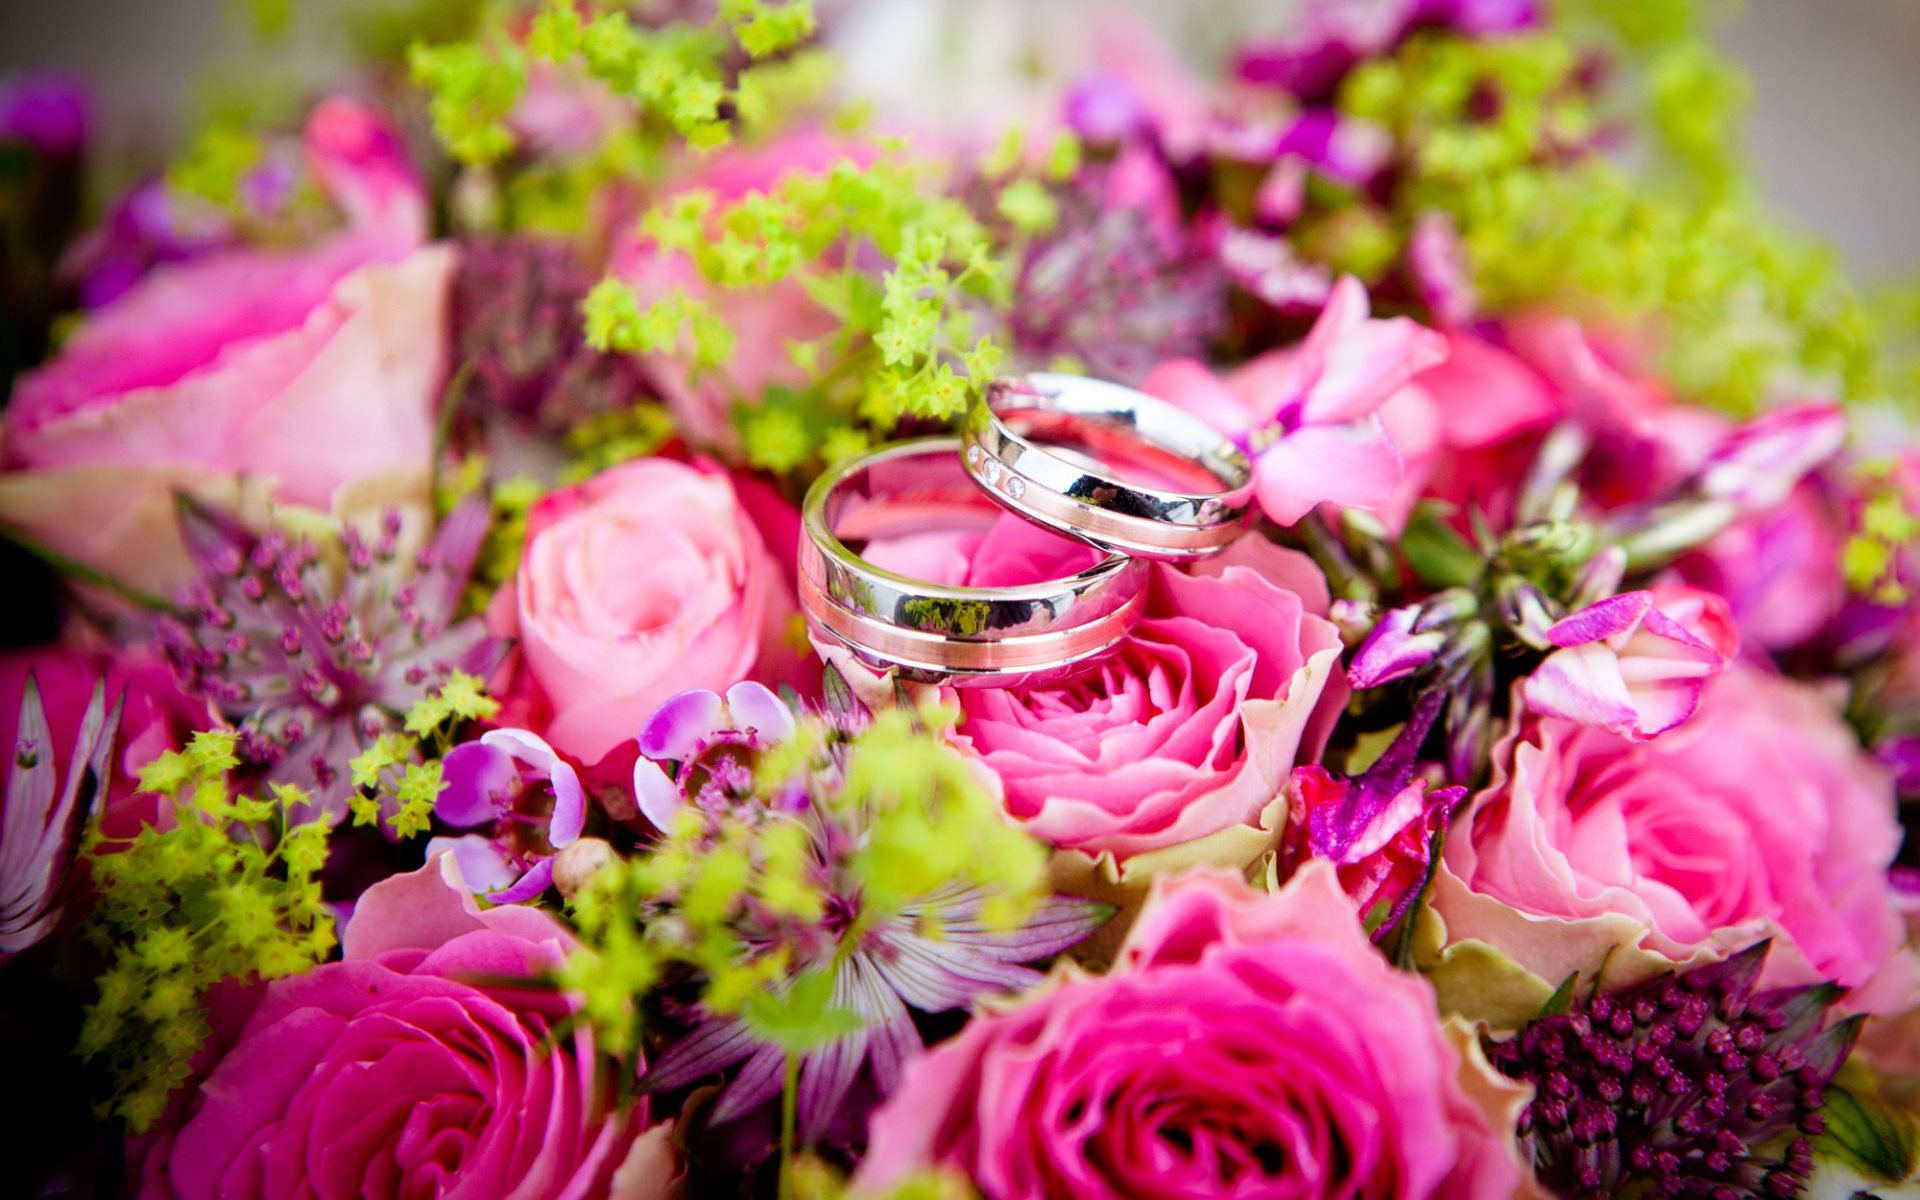 Wedding rings on a flowers bouquet by Olessya